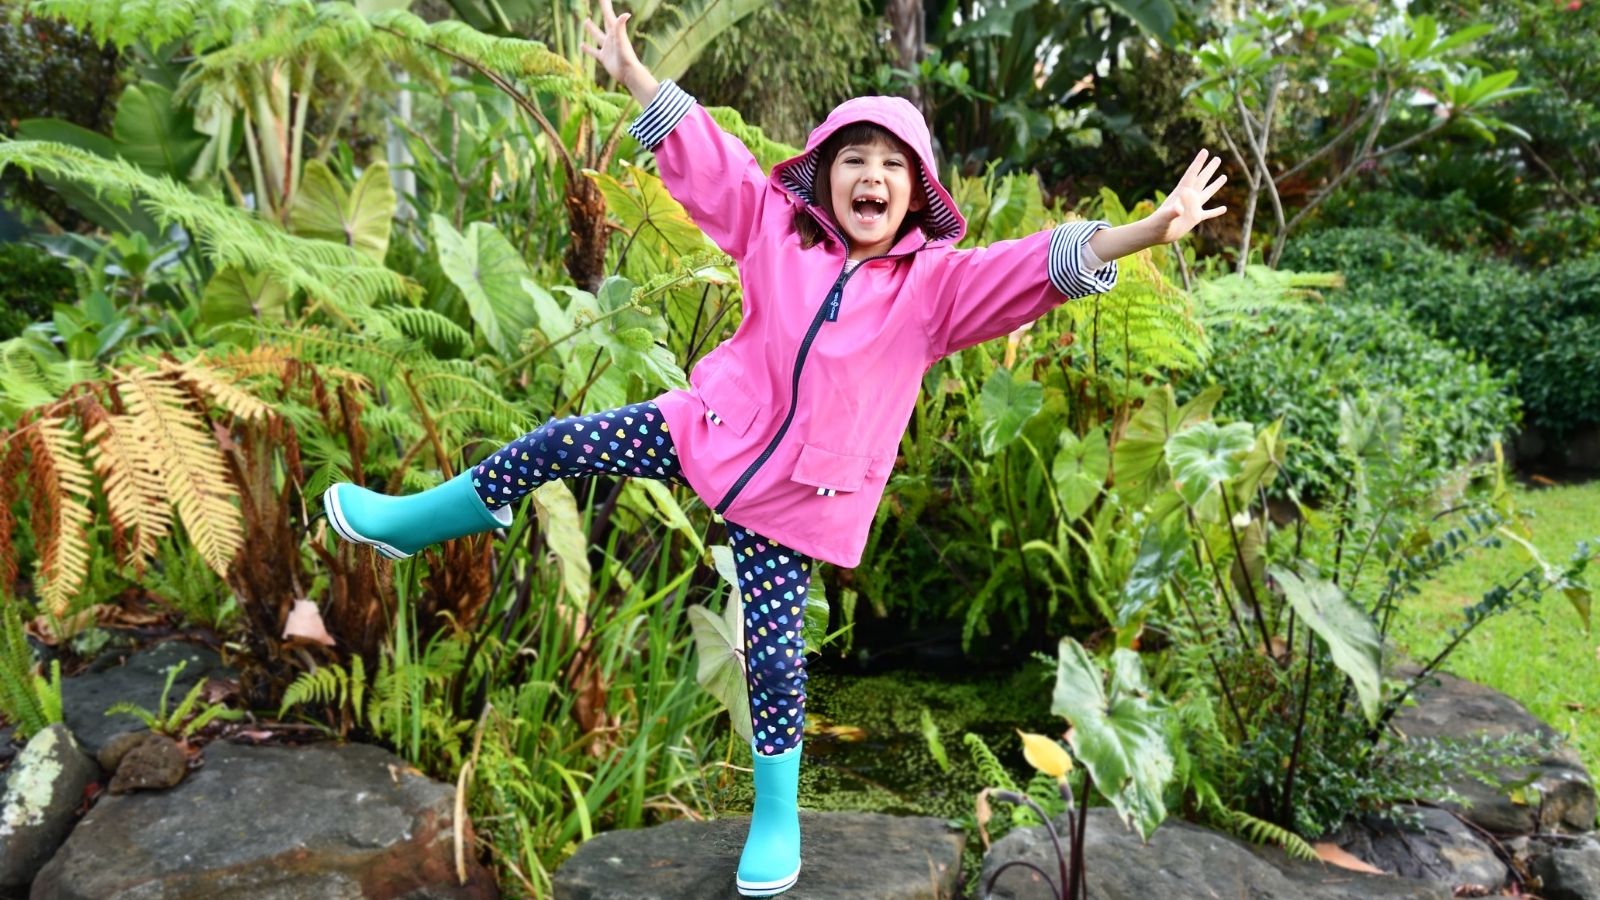 How kids rainwear promotes outdoor play